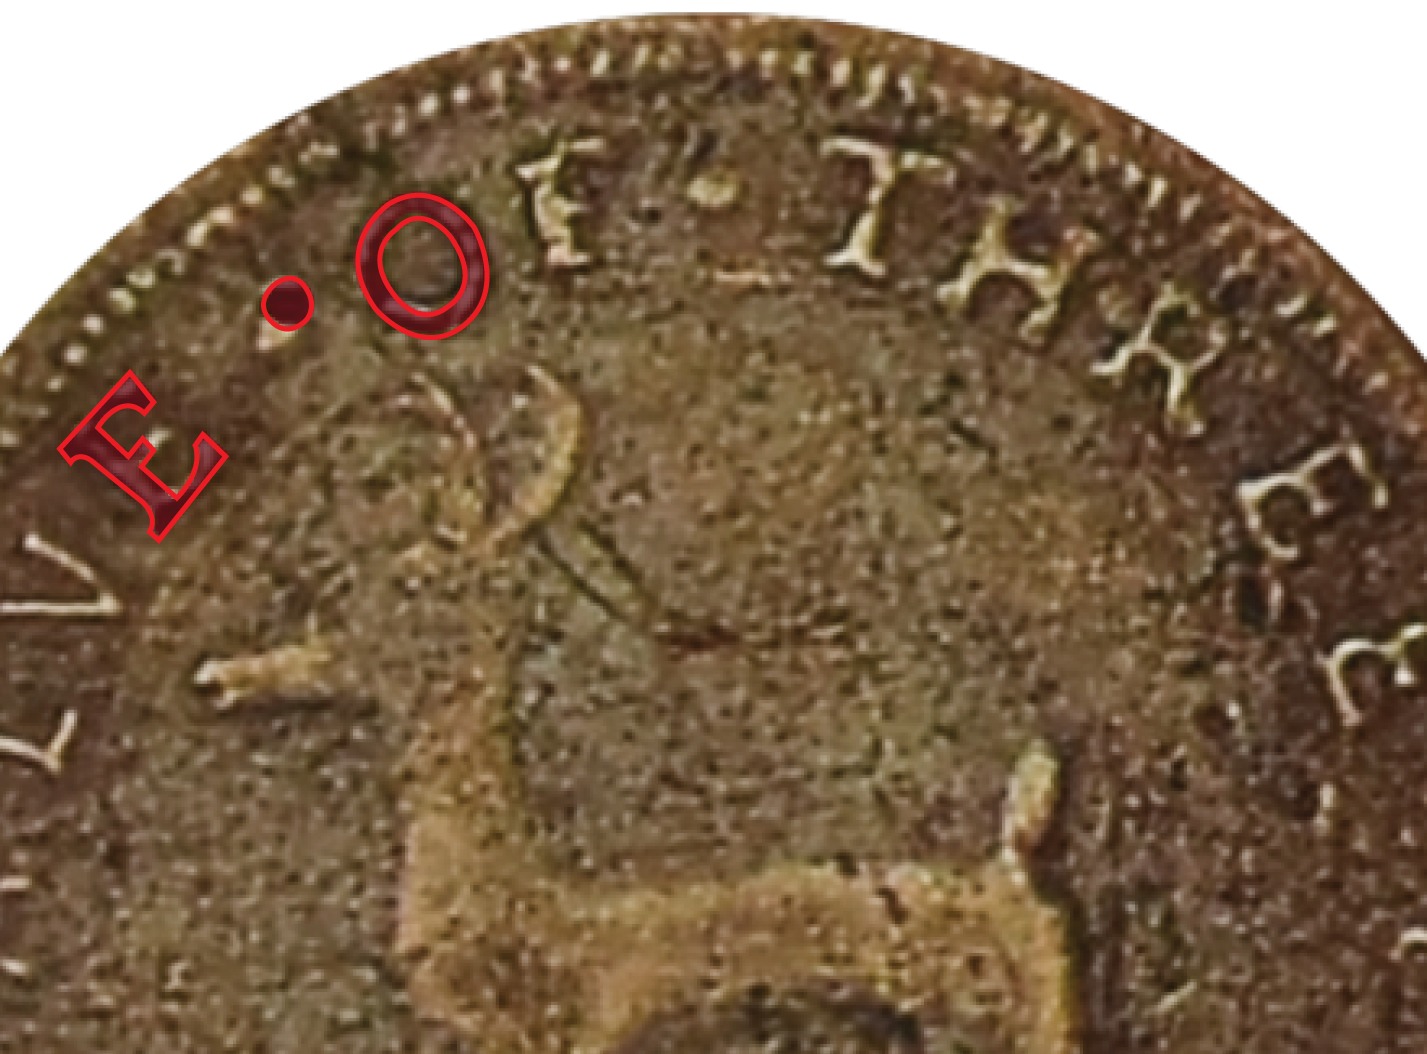 1737 higley copper freidus 1.2-a, w-8200 diagnostic photo reverse